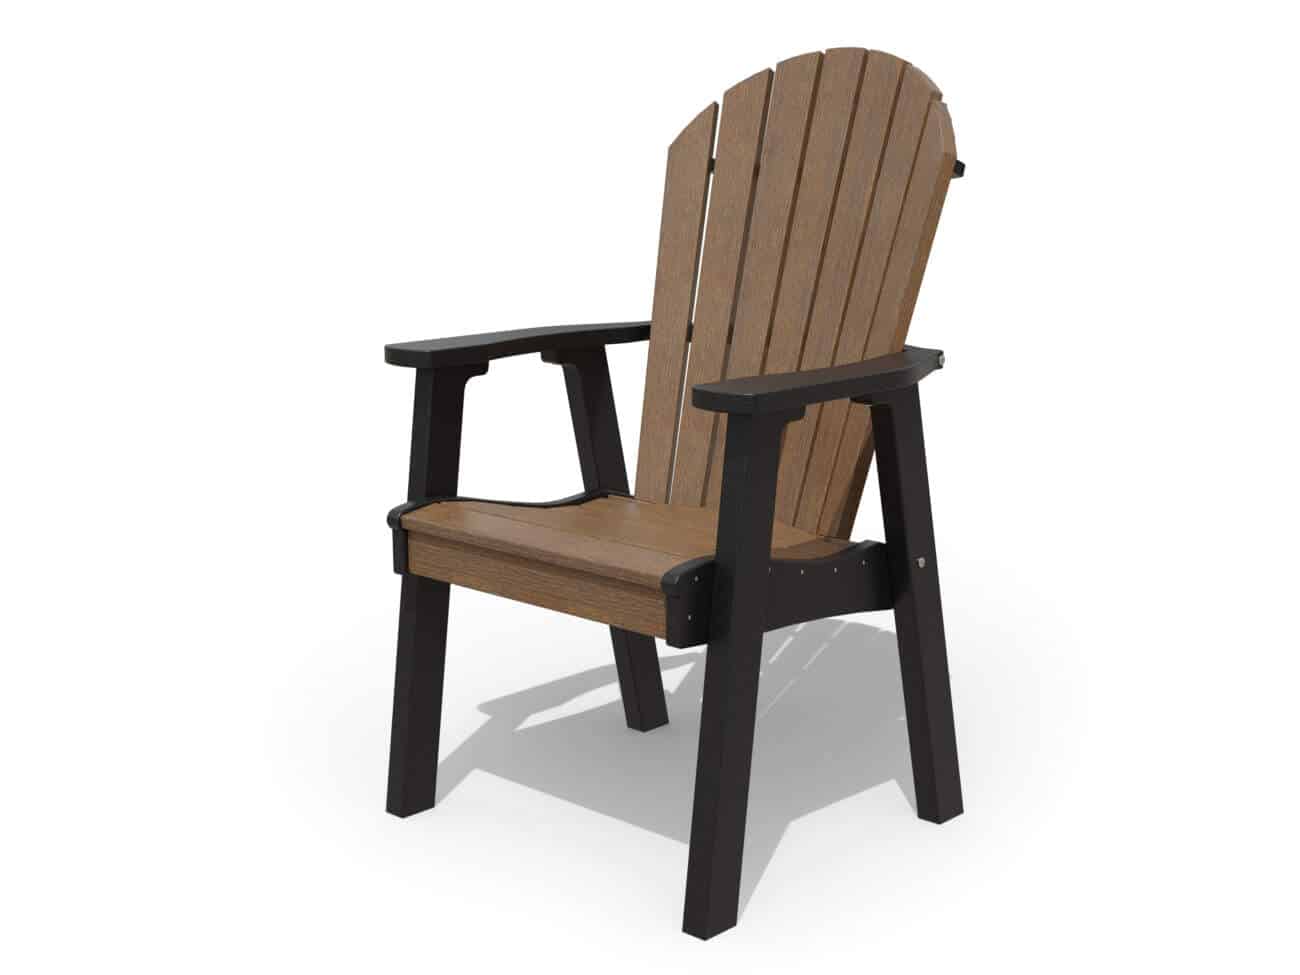 Adirondack Round Dining Chair poly wood grain